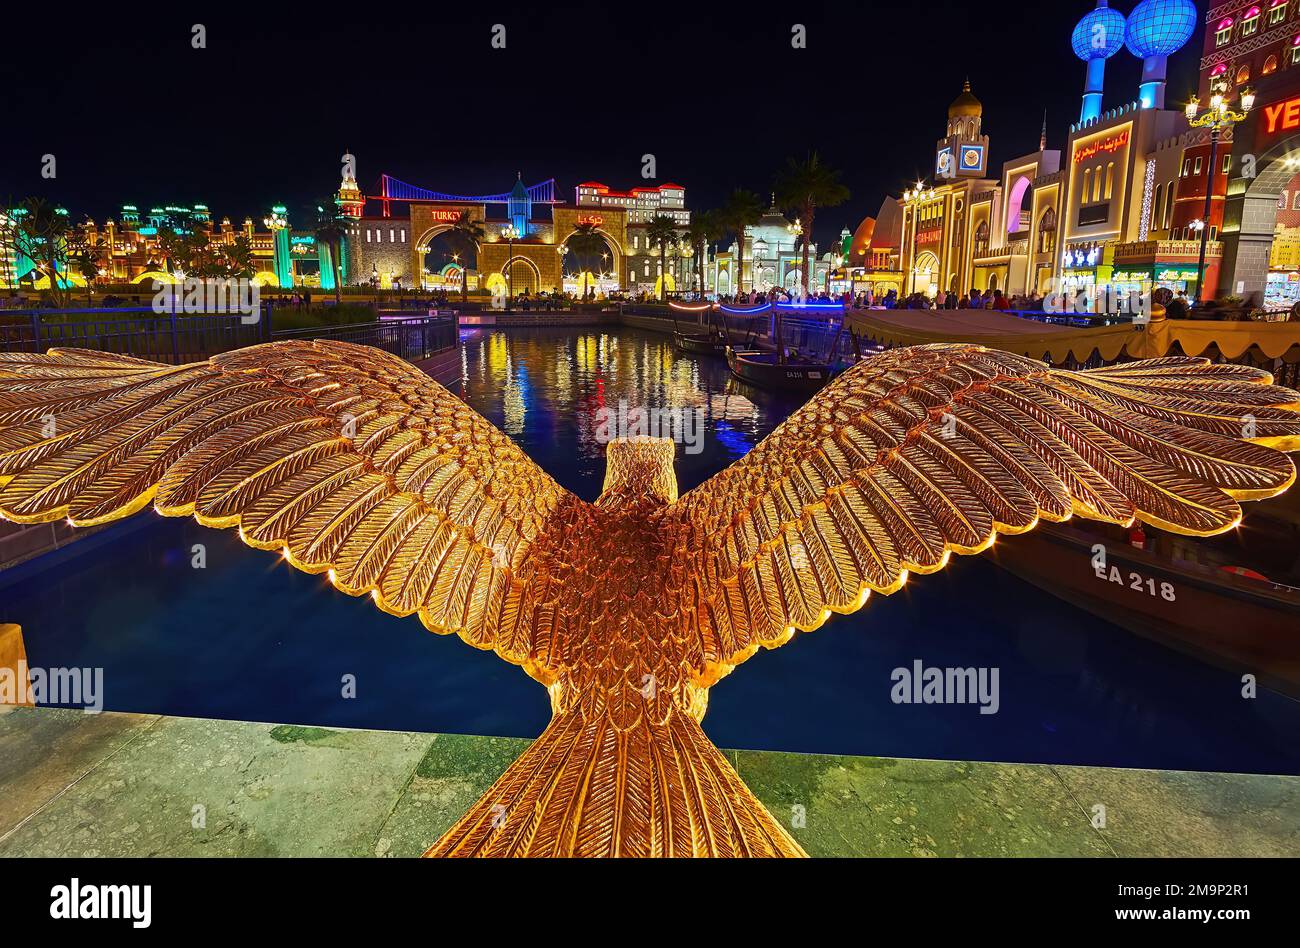 DUBAI, UAE - MARCH 6, 2020: The sculpture of golden eagle against the brightly illuminated Pavilions of Global Village Dubai, on March 6 in Dubai Stock Photo